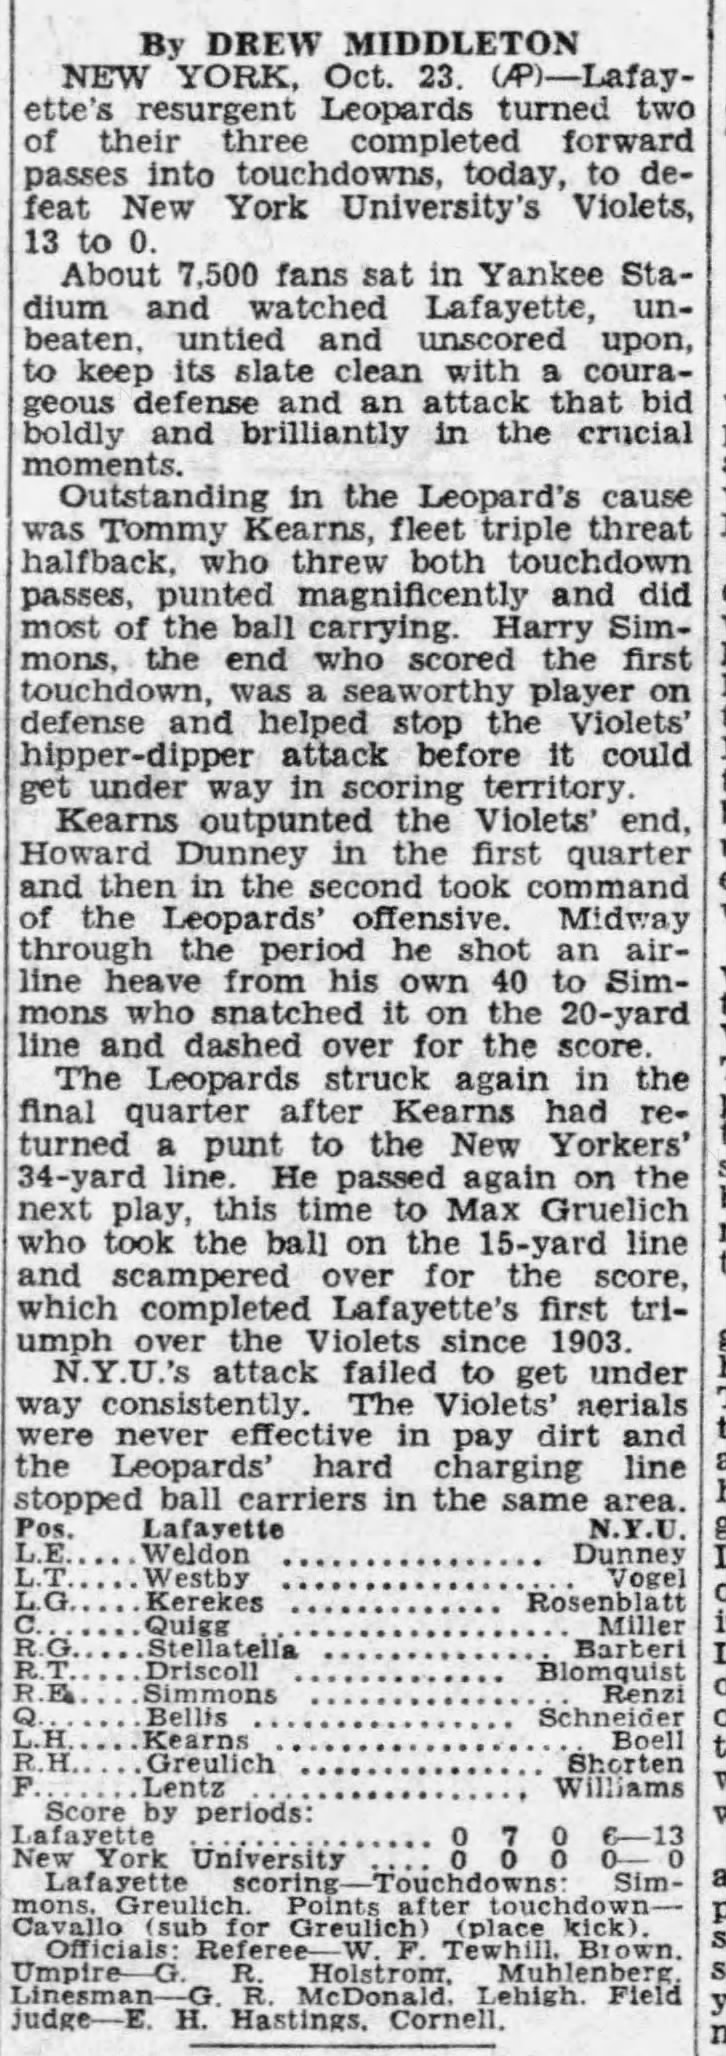 Lafayette defeats N.Y.U., 13–0, to keep its 1937 slate clean